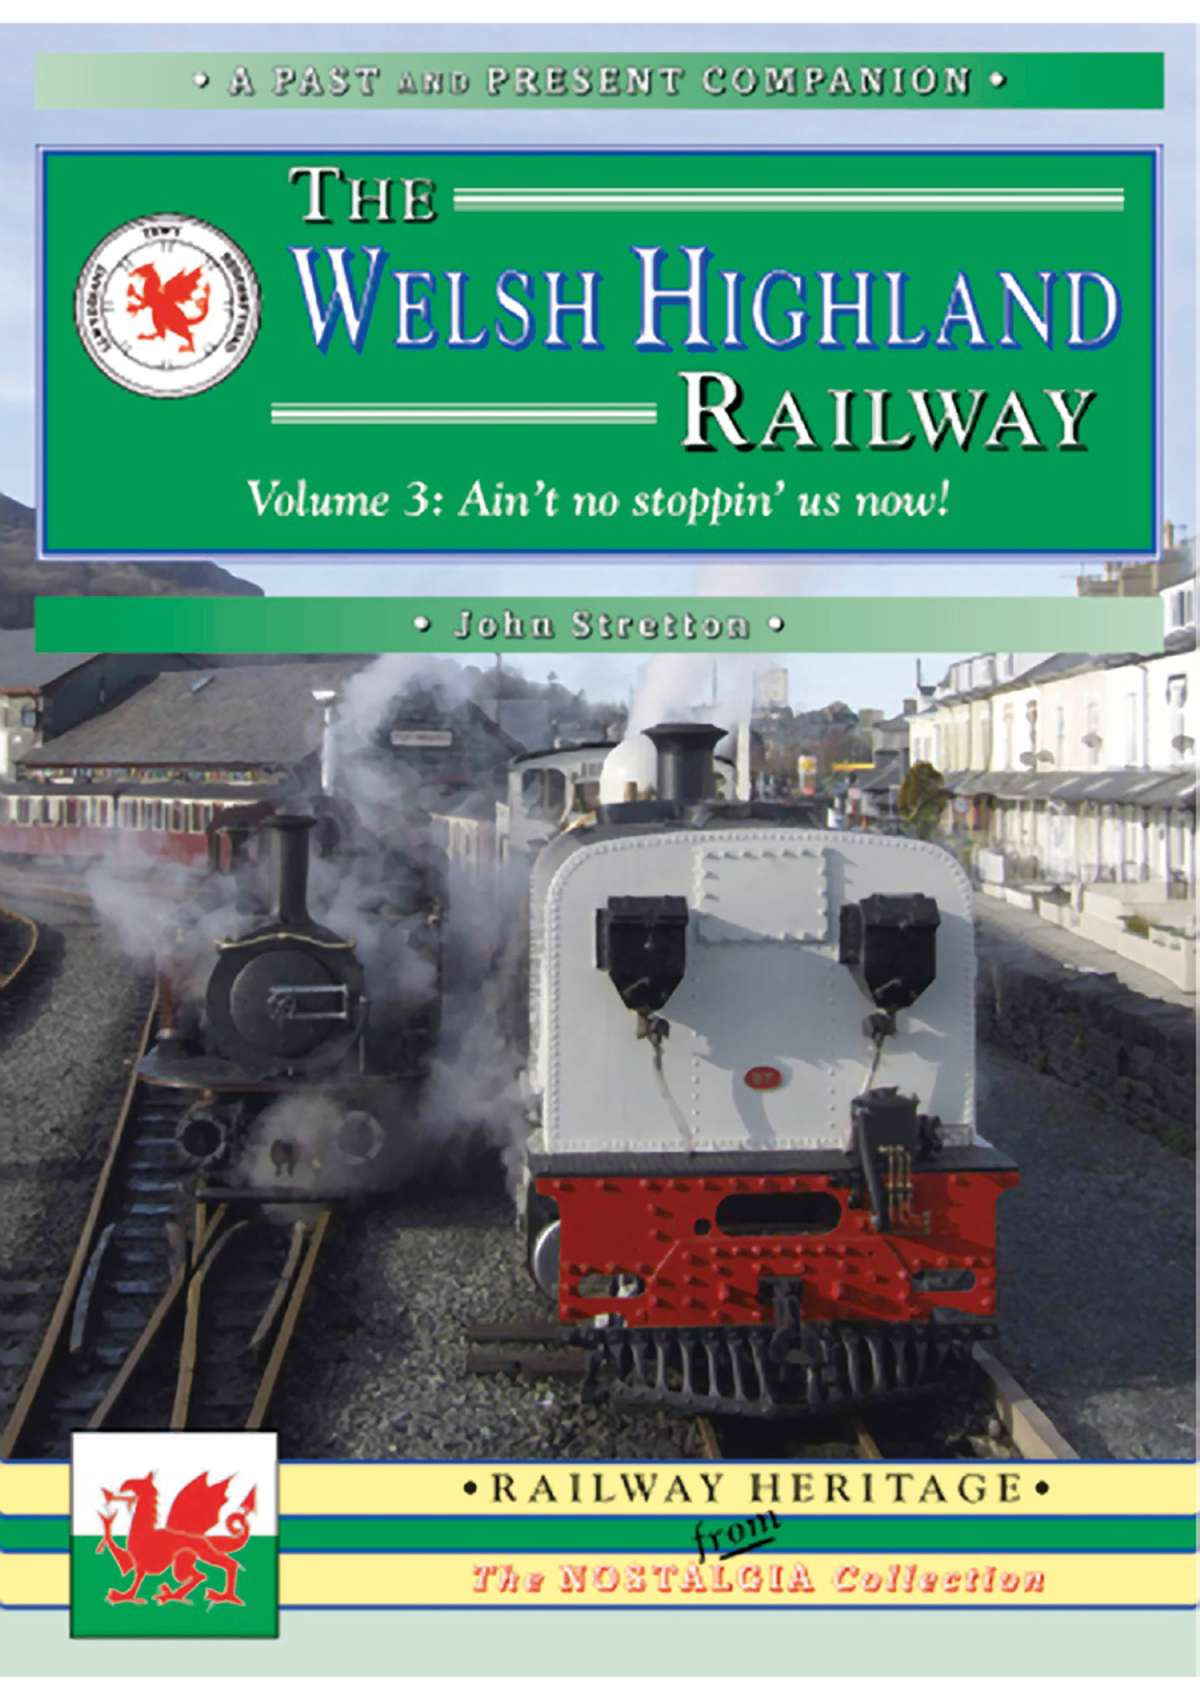 2598 - The Welsh Highland Railway Volume 3